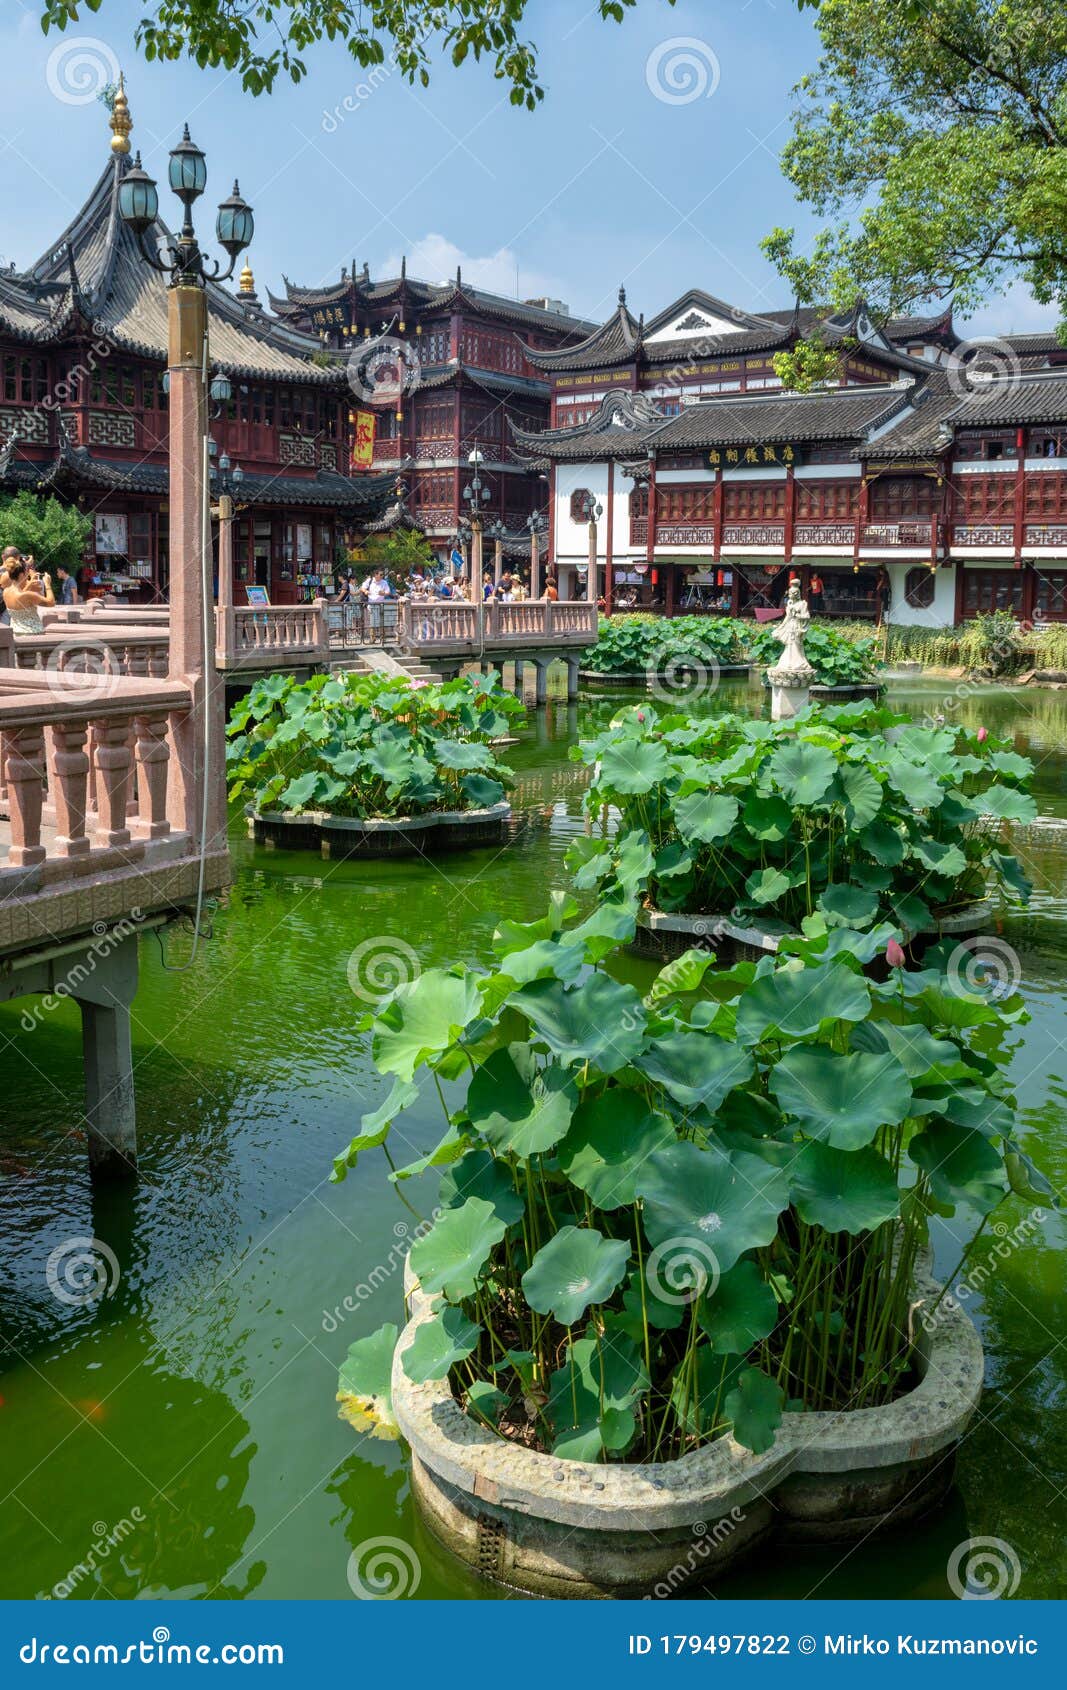 Yuyuan Garden Yu Garden A Classical Chinese Garden In The Old City Of Shanghai Editorial Photography Image Of Lotus Garden